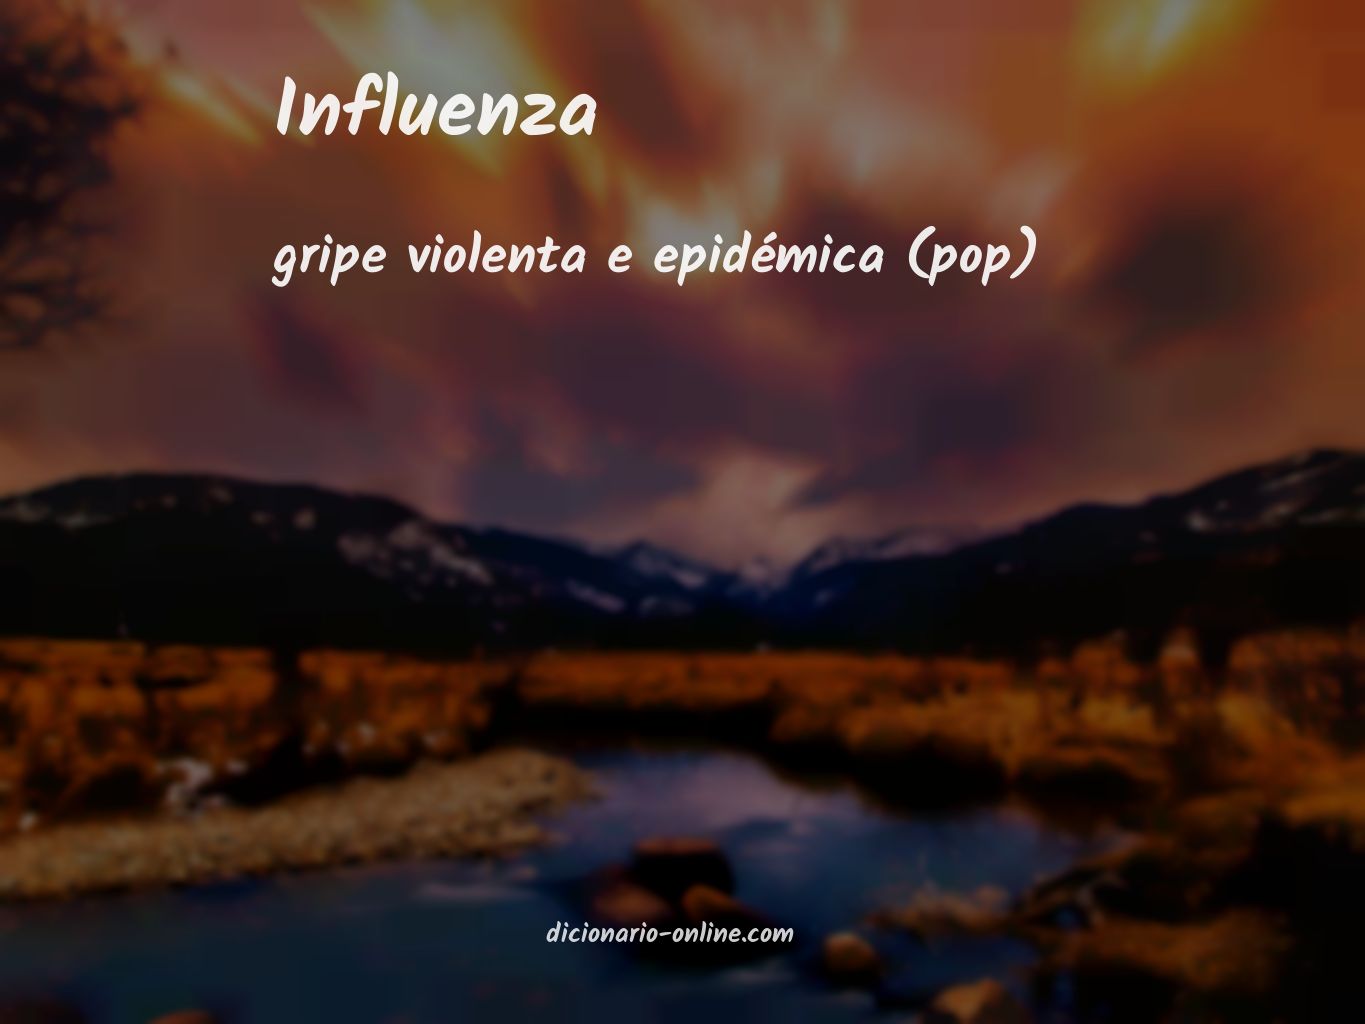 Significado de influenza